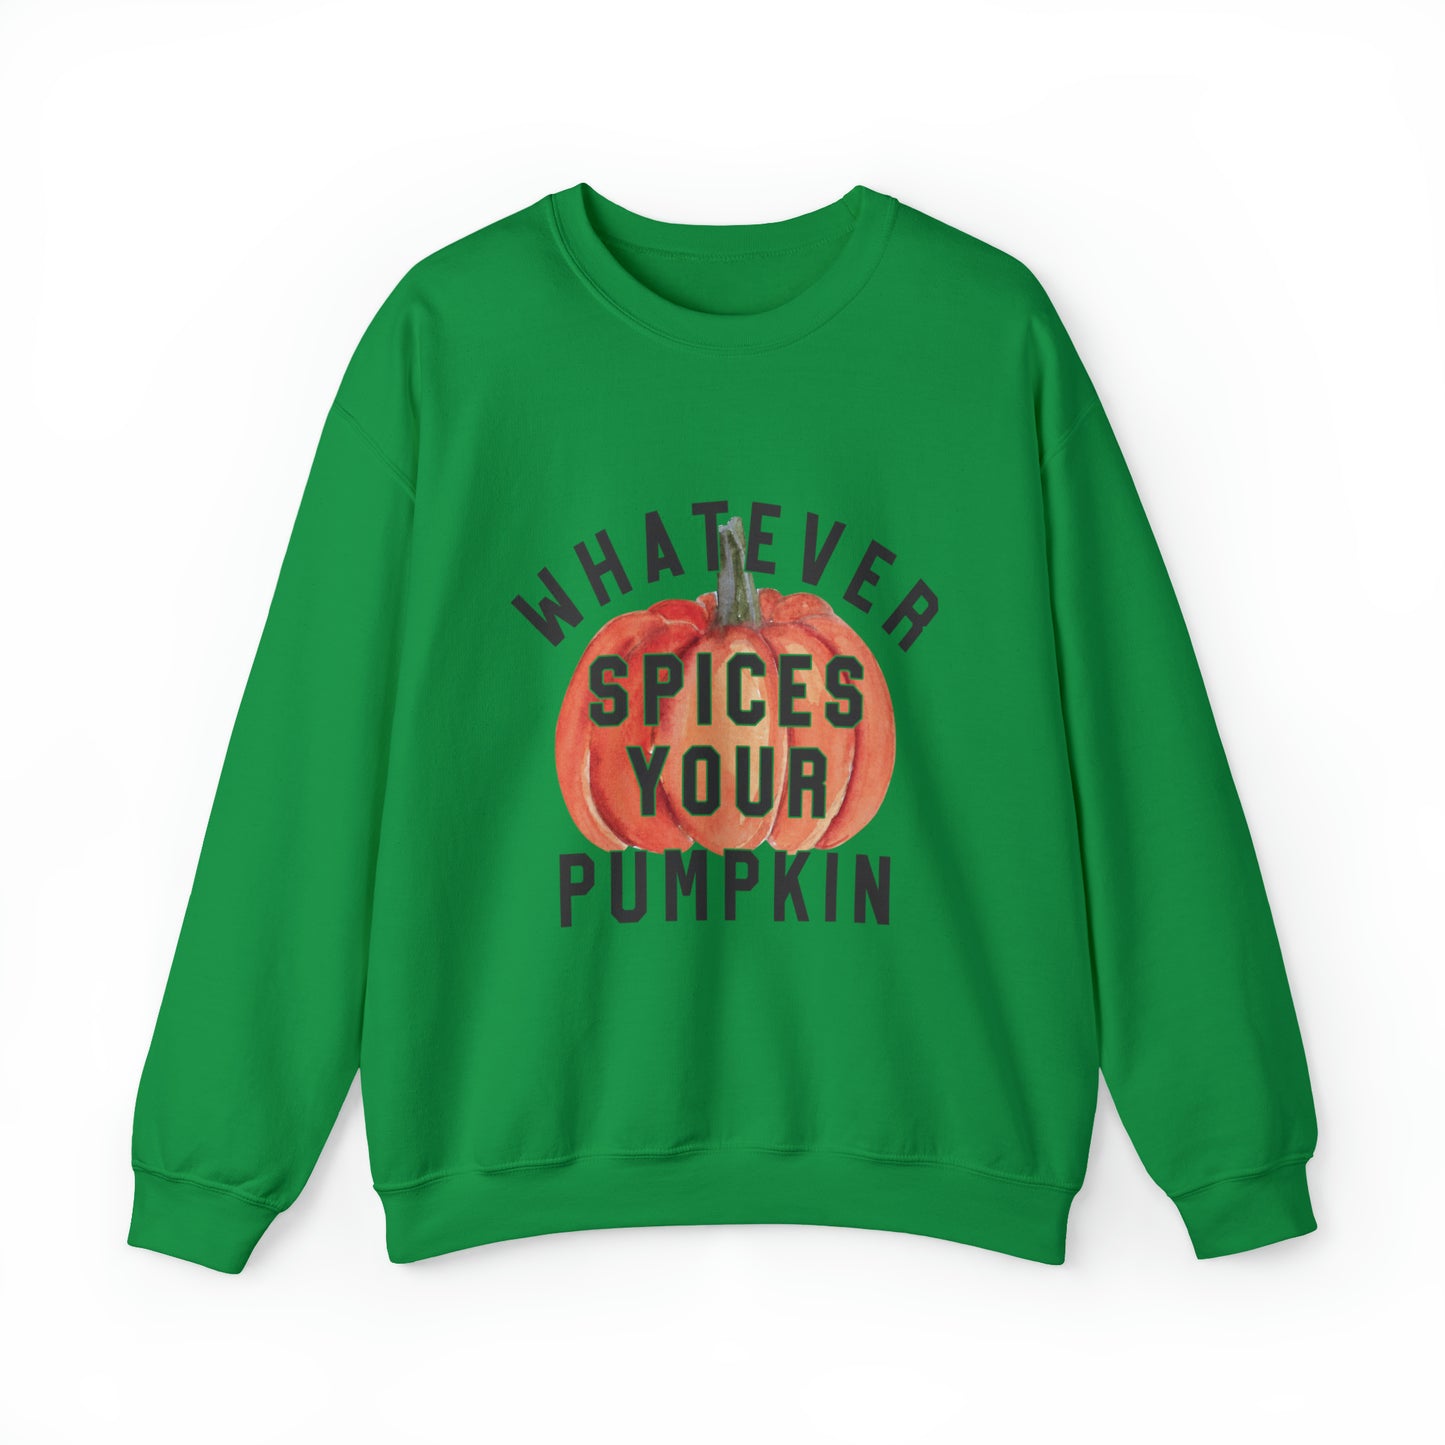 Whatever spices your pumpkin Crewneck Sweatshirt